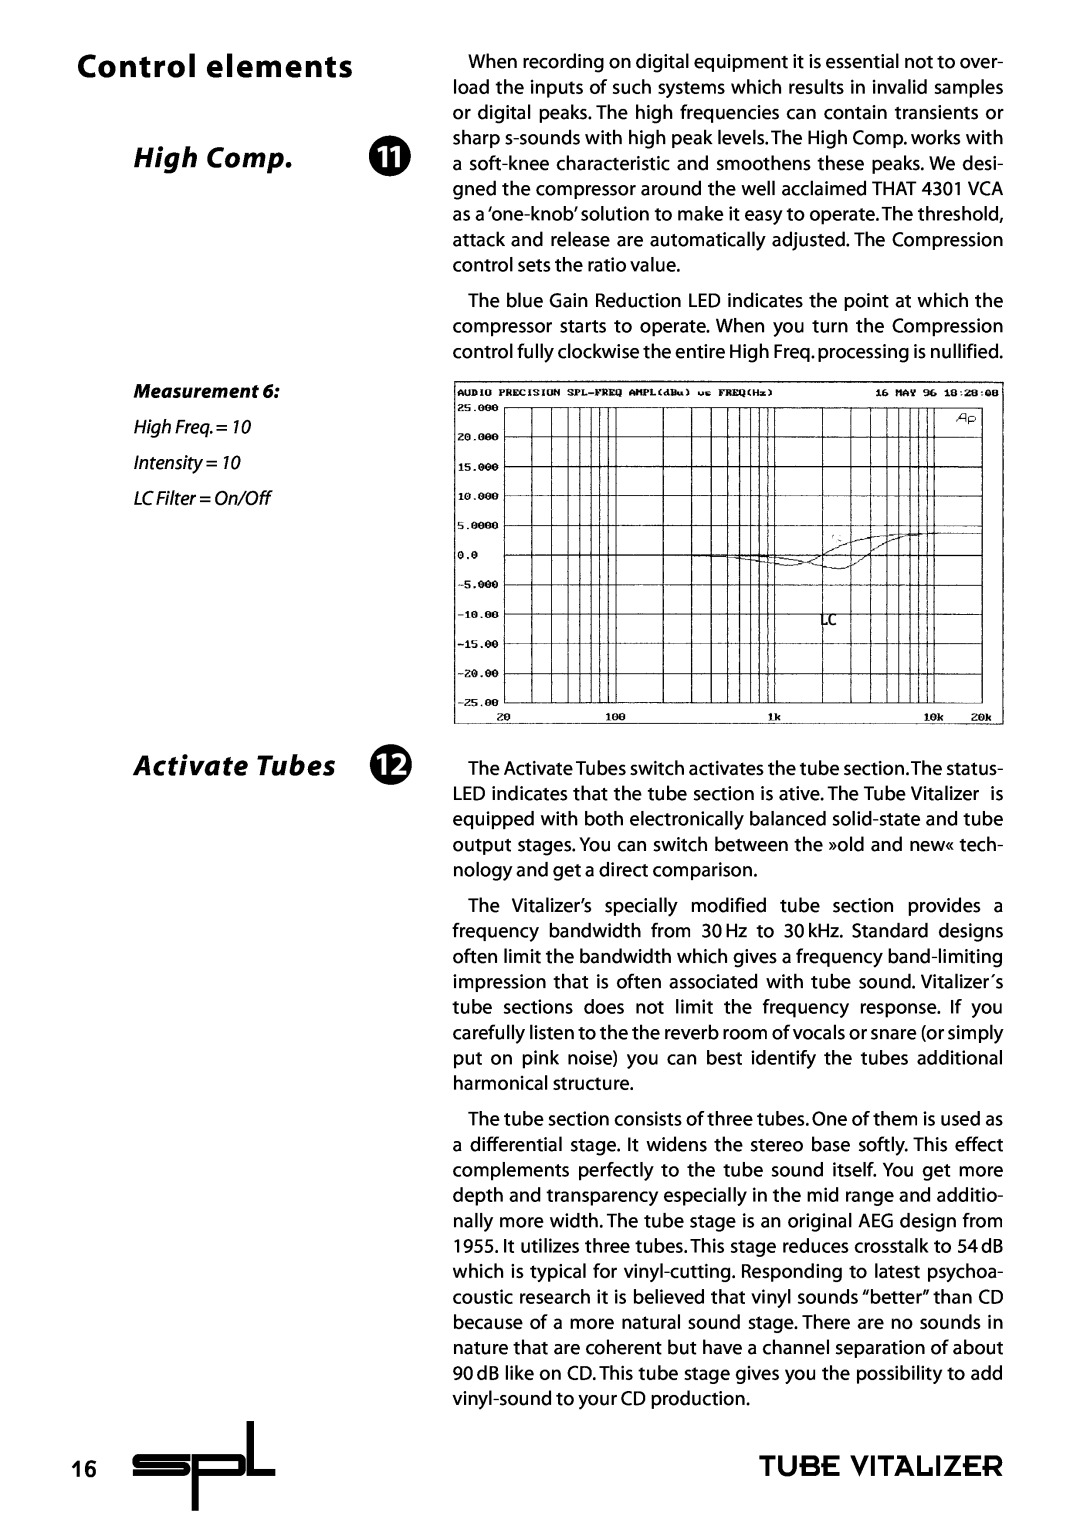 Sound Performance Lab 9530 manual High Comp, Control elements, Tube Vitalizer, Measurement 